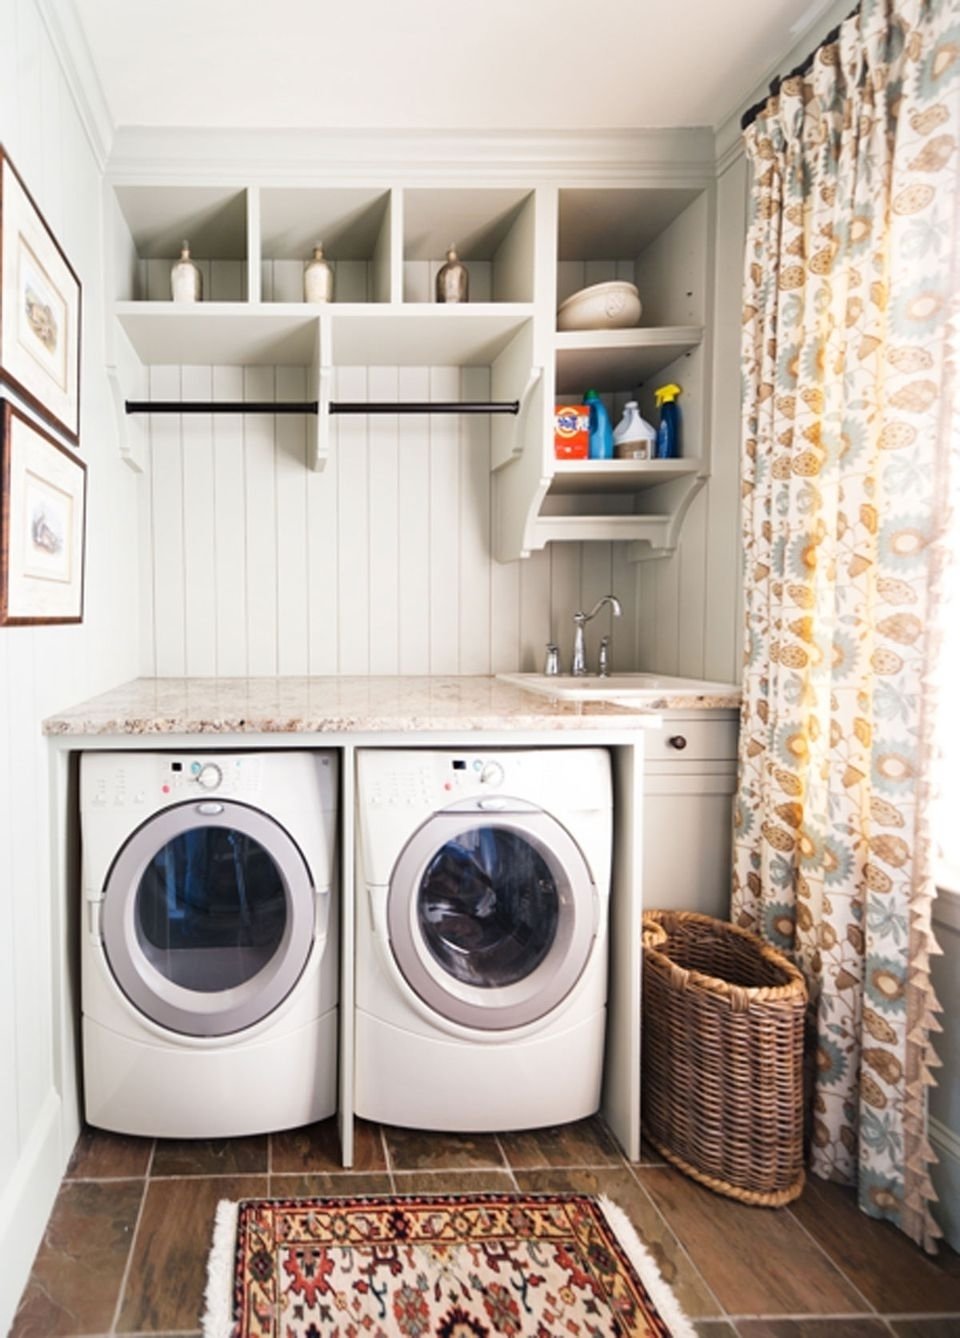 10 Most Popular Small Laundry Room Ideas Pinterest home design interior inspiring designs cute laundry rooms wall art 2022